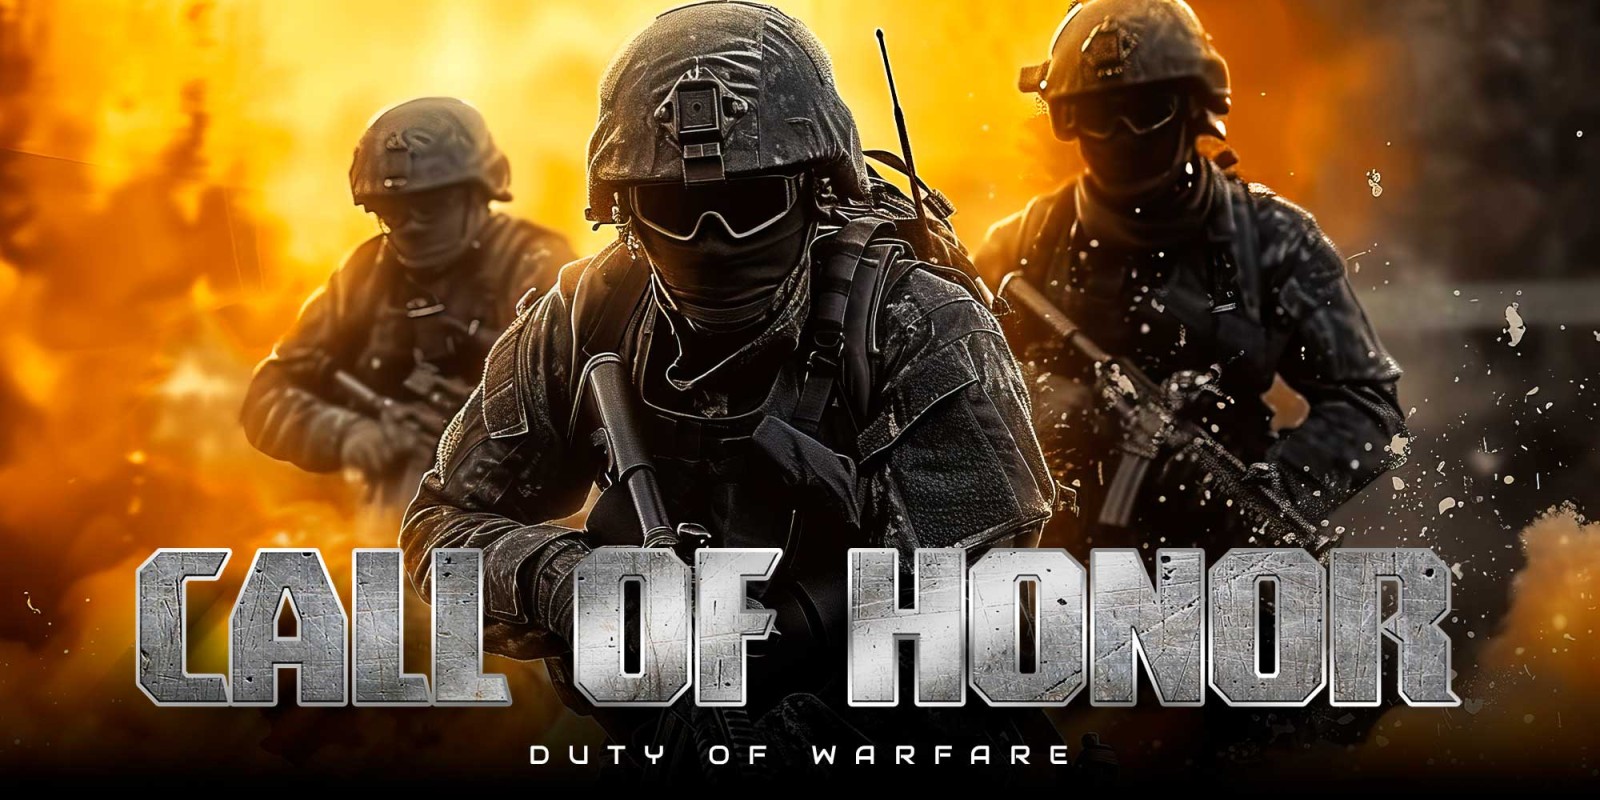 Call of Honor - Duty of Warfare